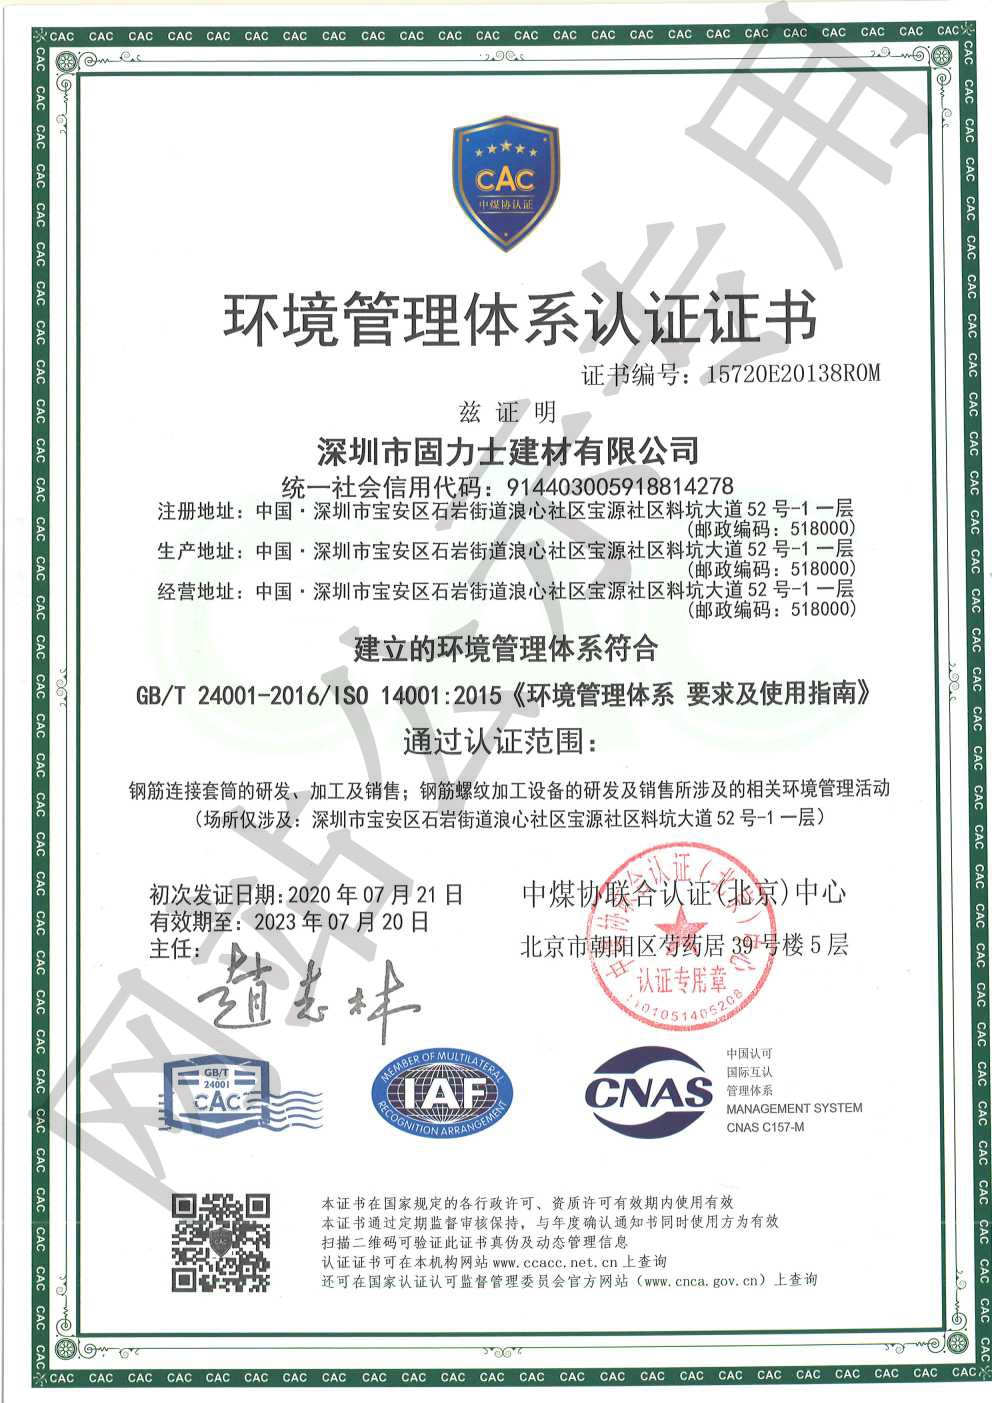 古冶ISO14001证书